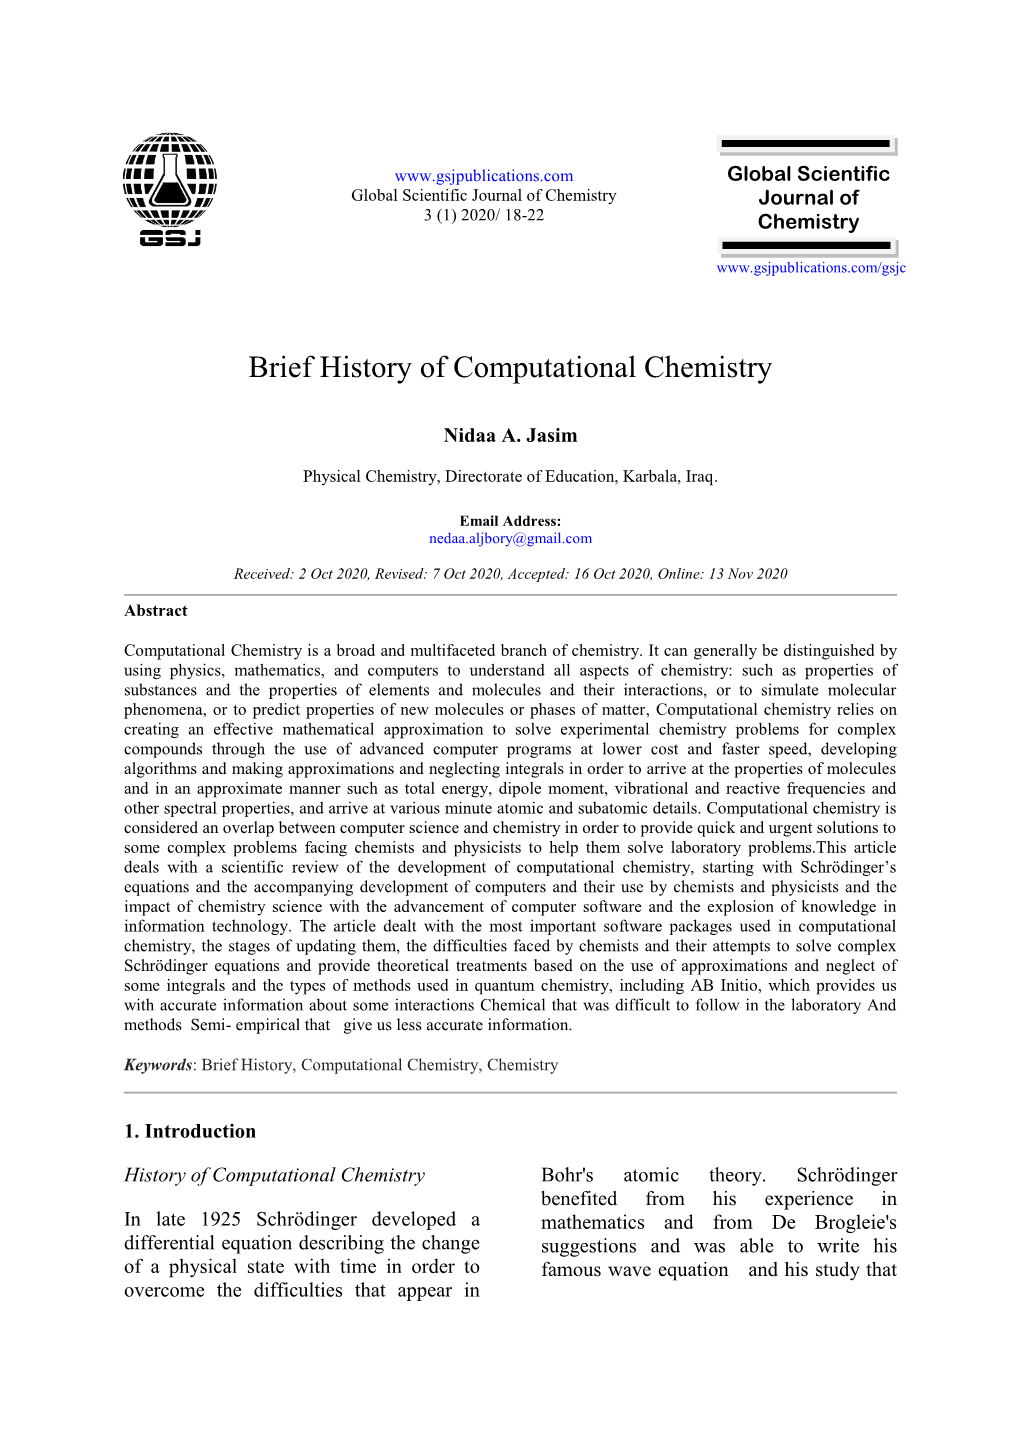 Brief History of Computational Chemistry